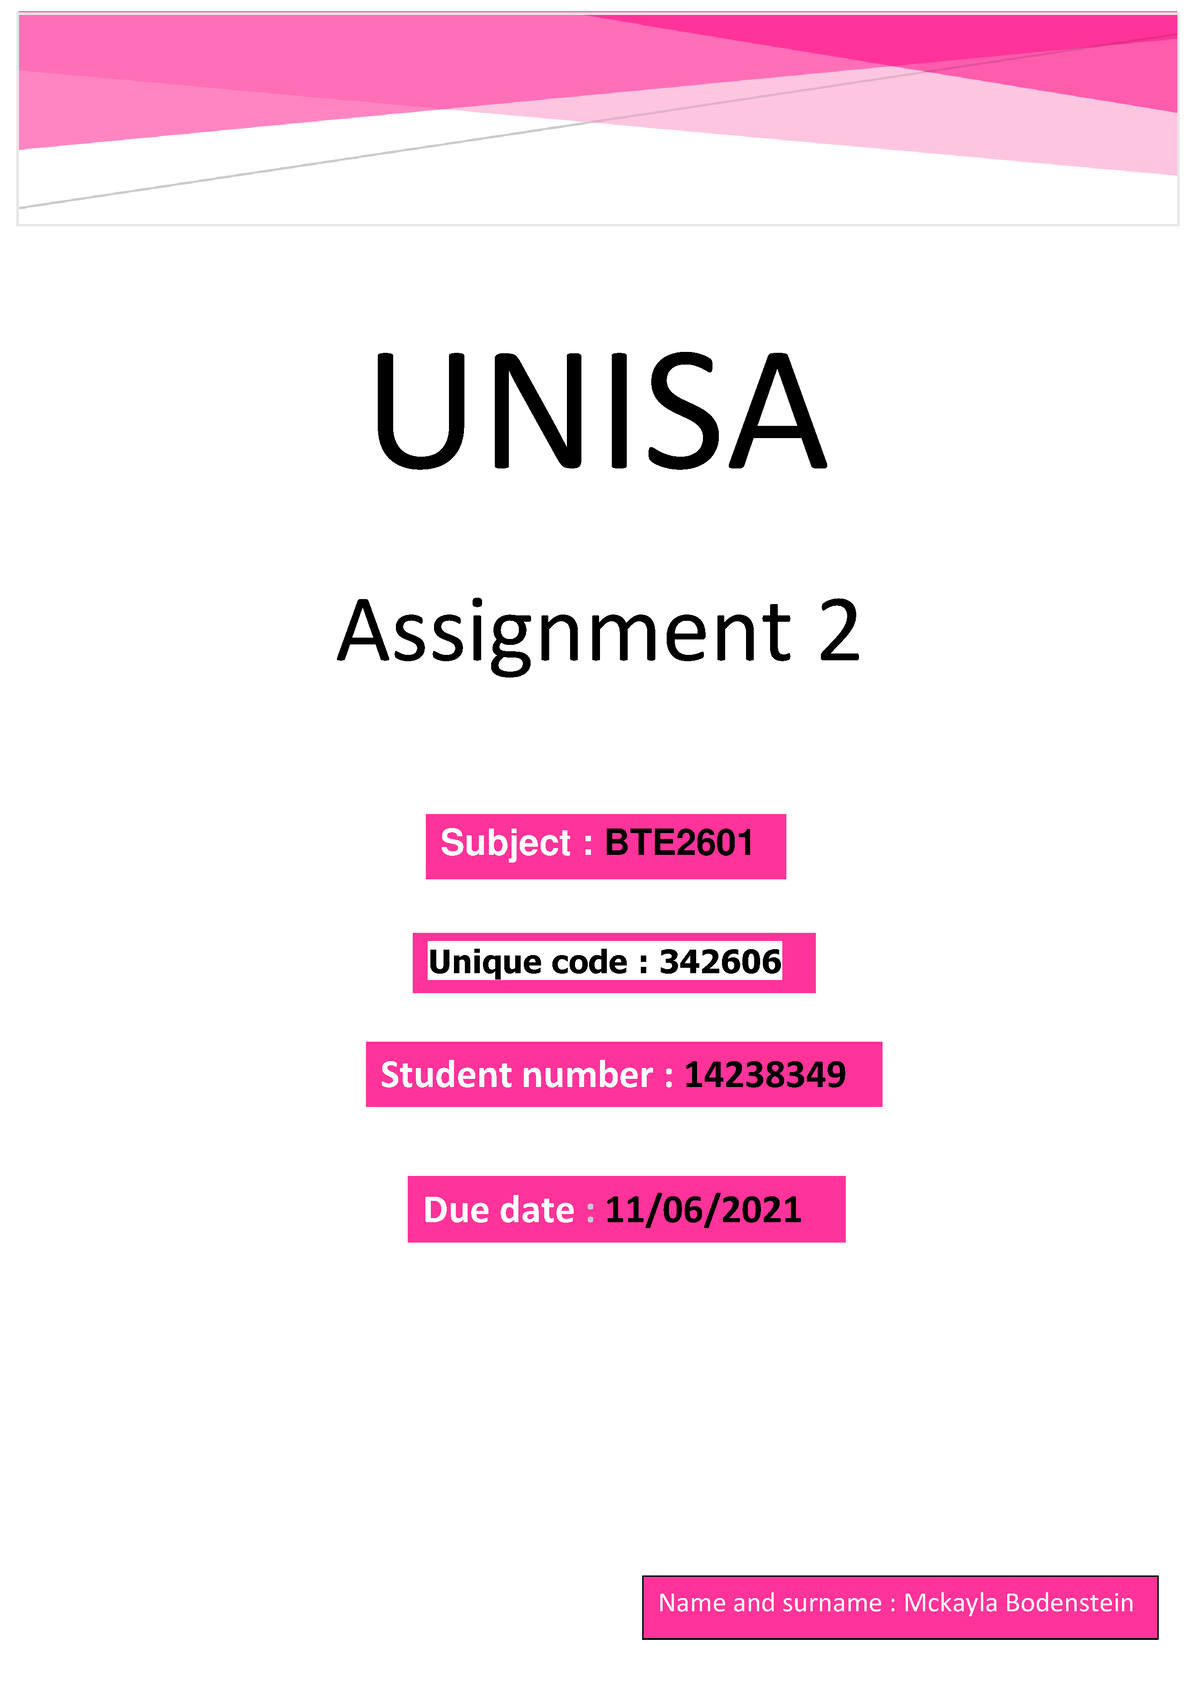 unisa assignment 2 due date